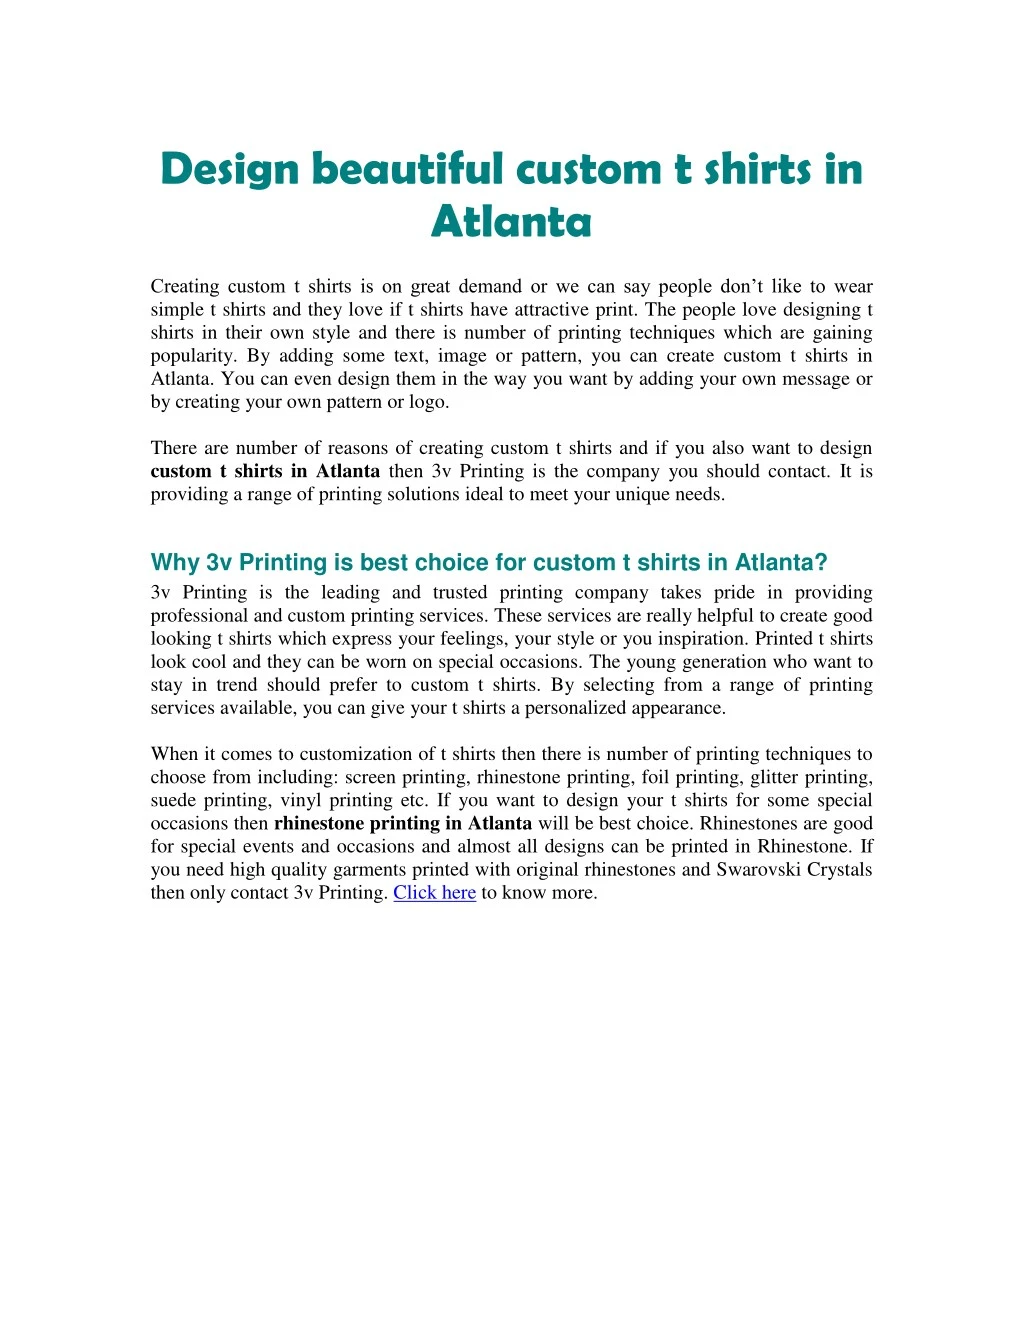 design beautiful custom t shirts in atlanta